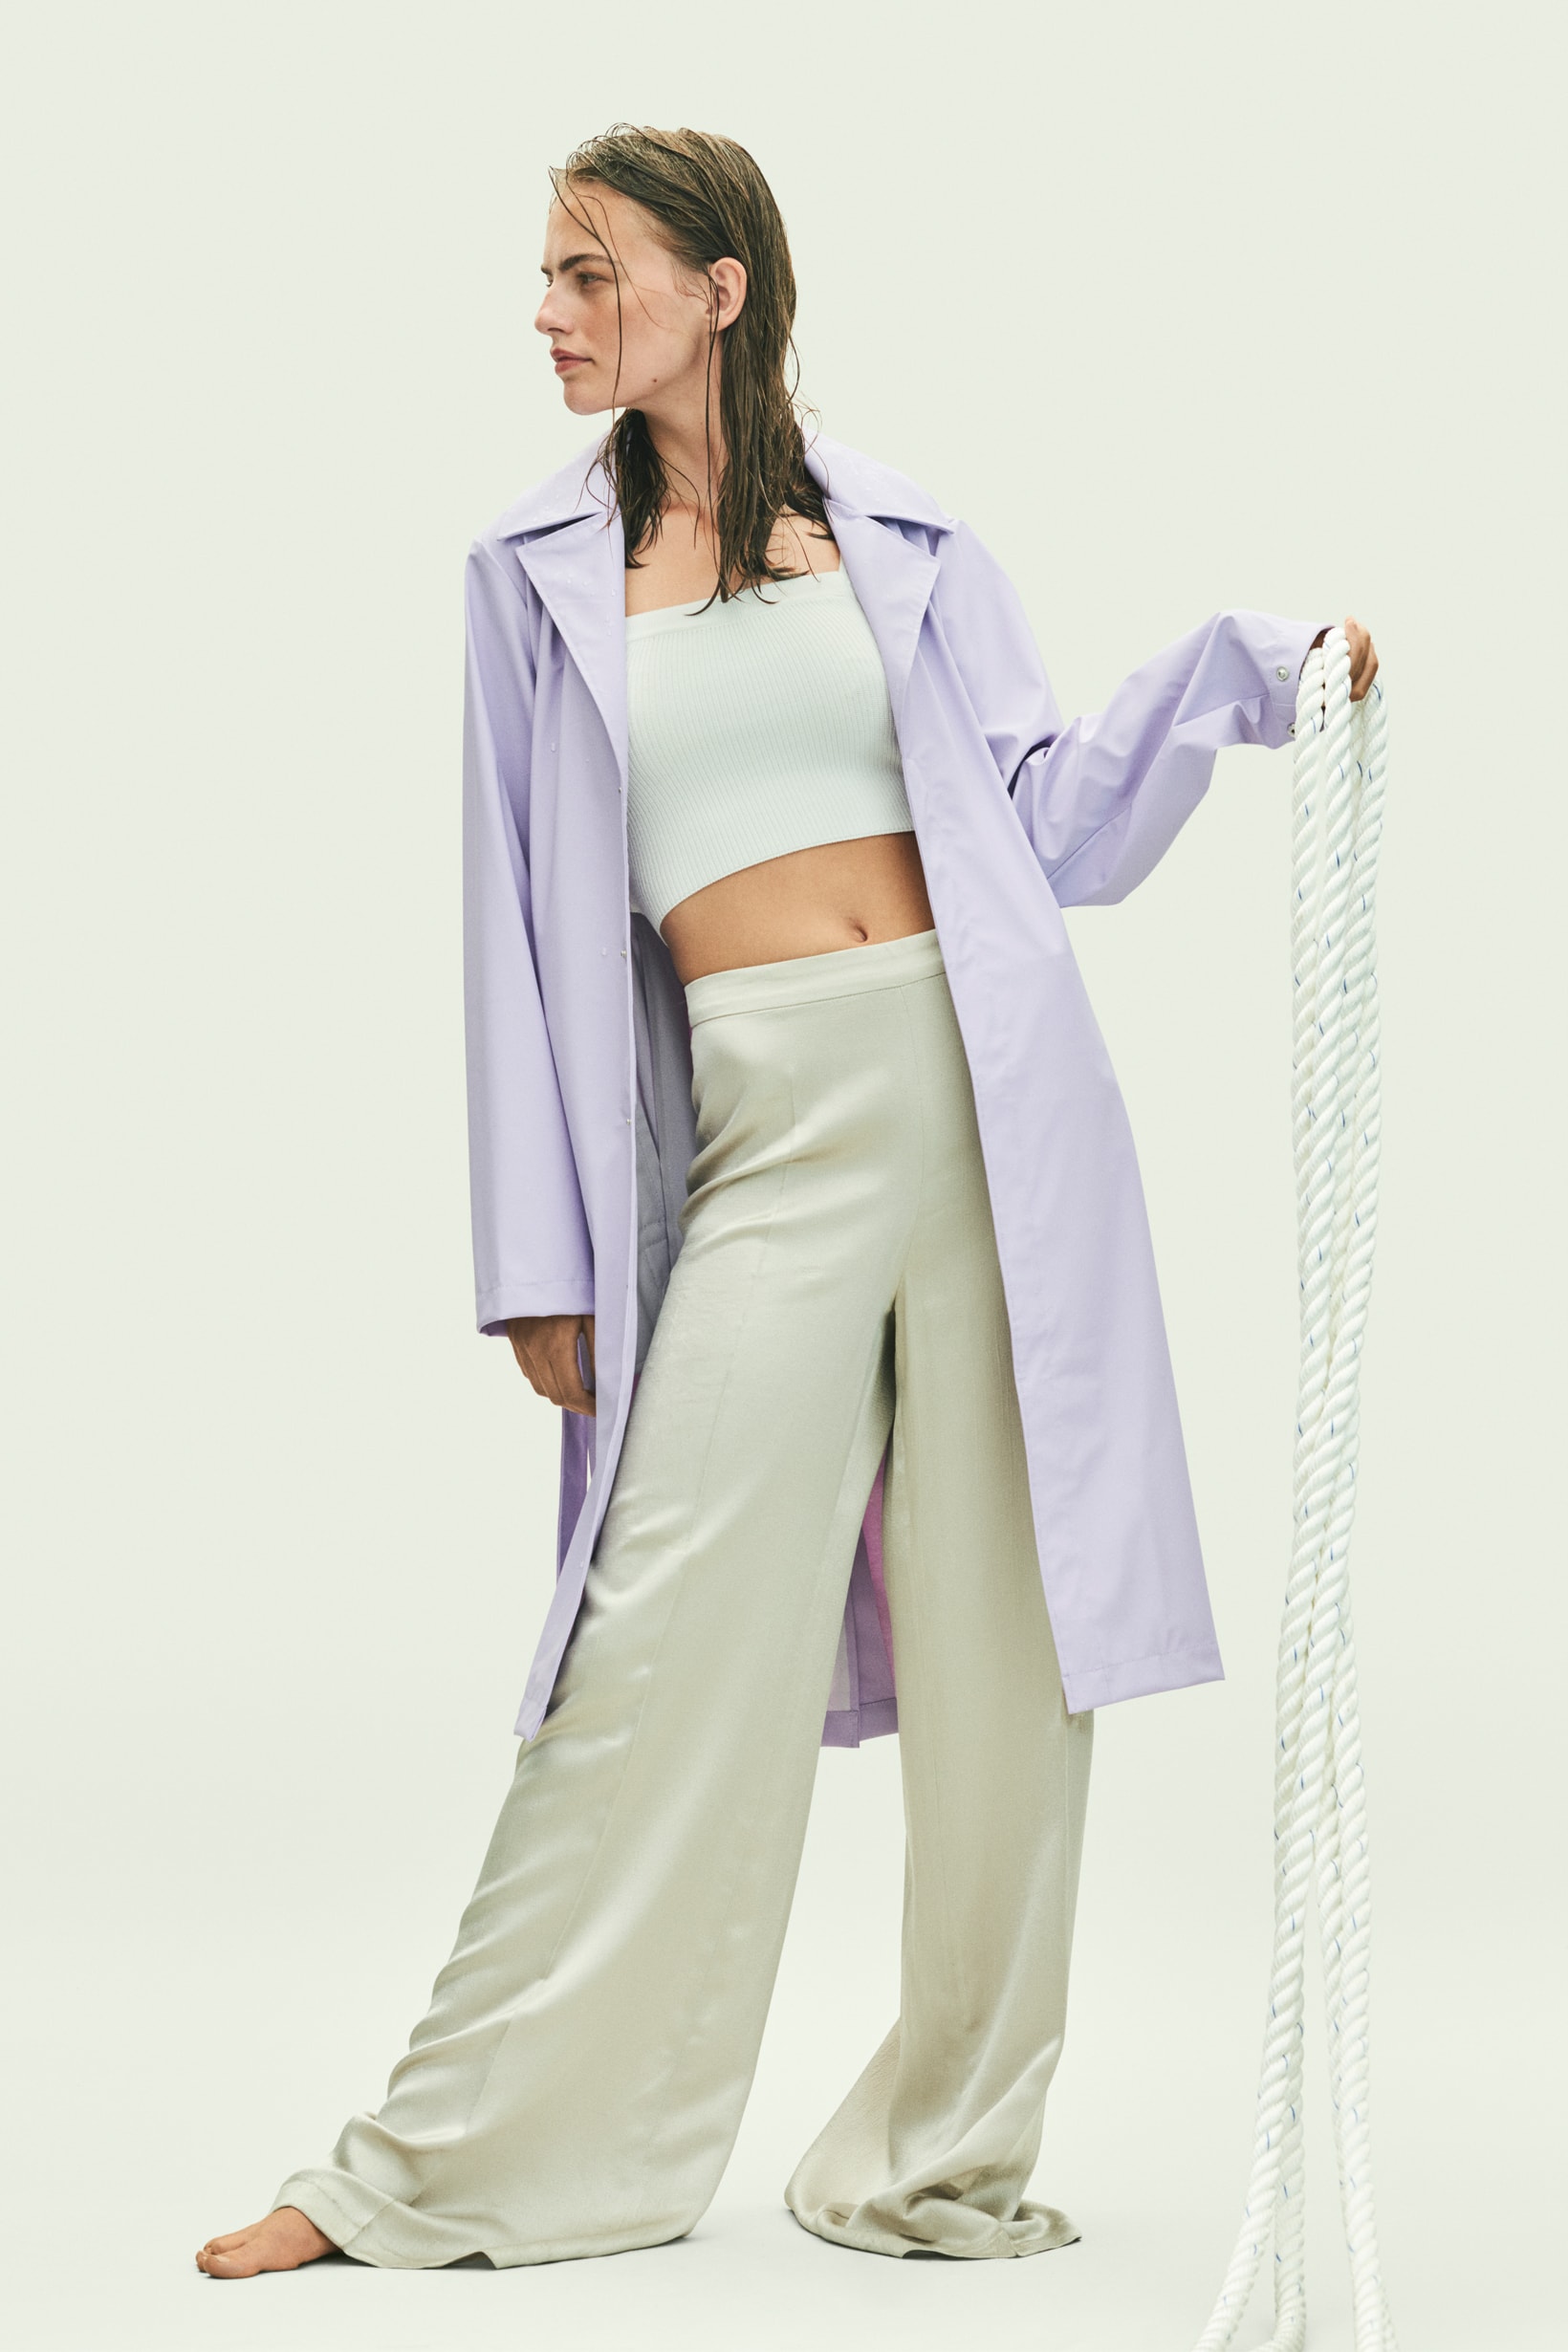 Rains Spring Summer 2019 Campaign Raincoat Lavender